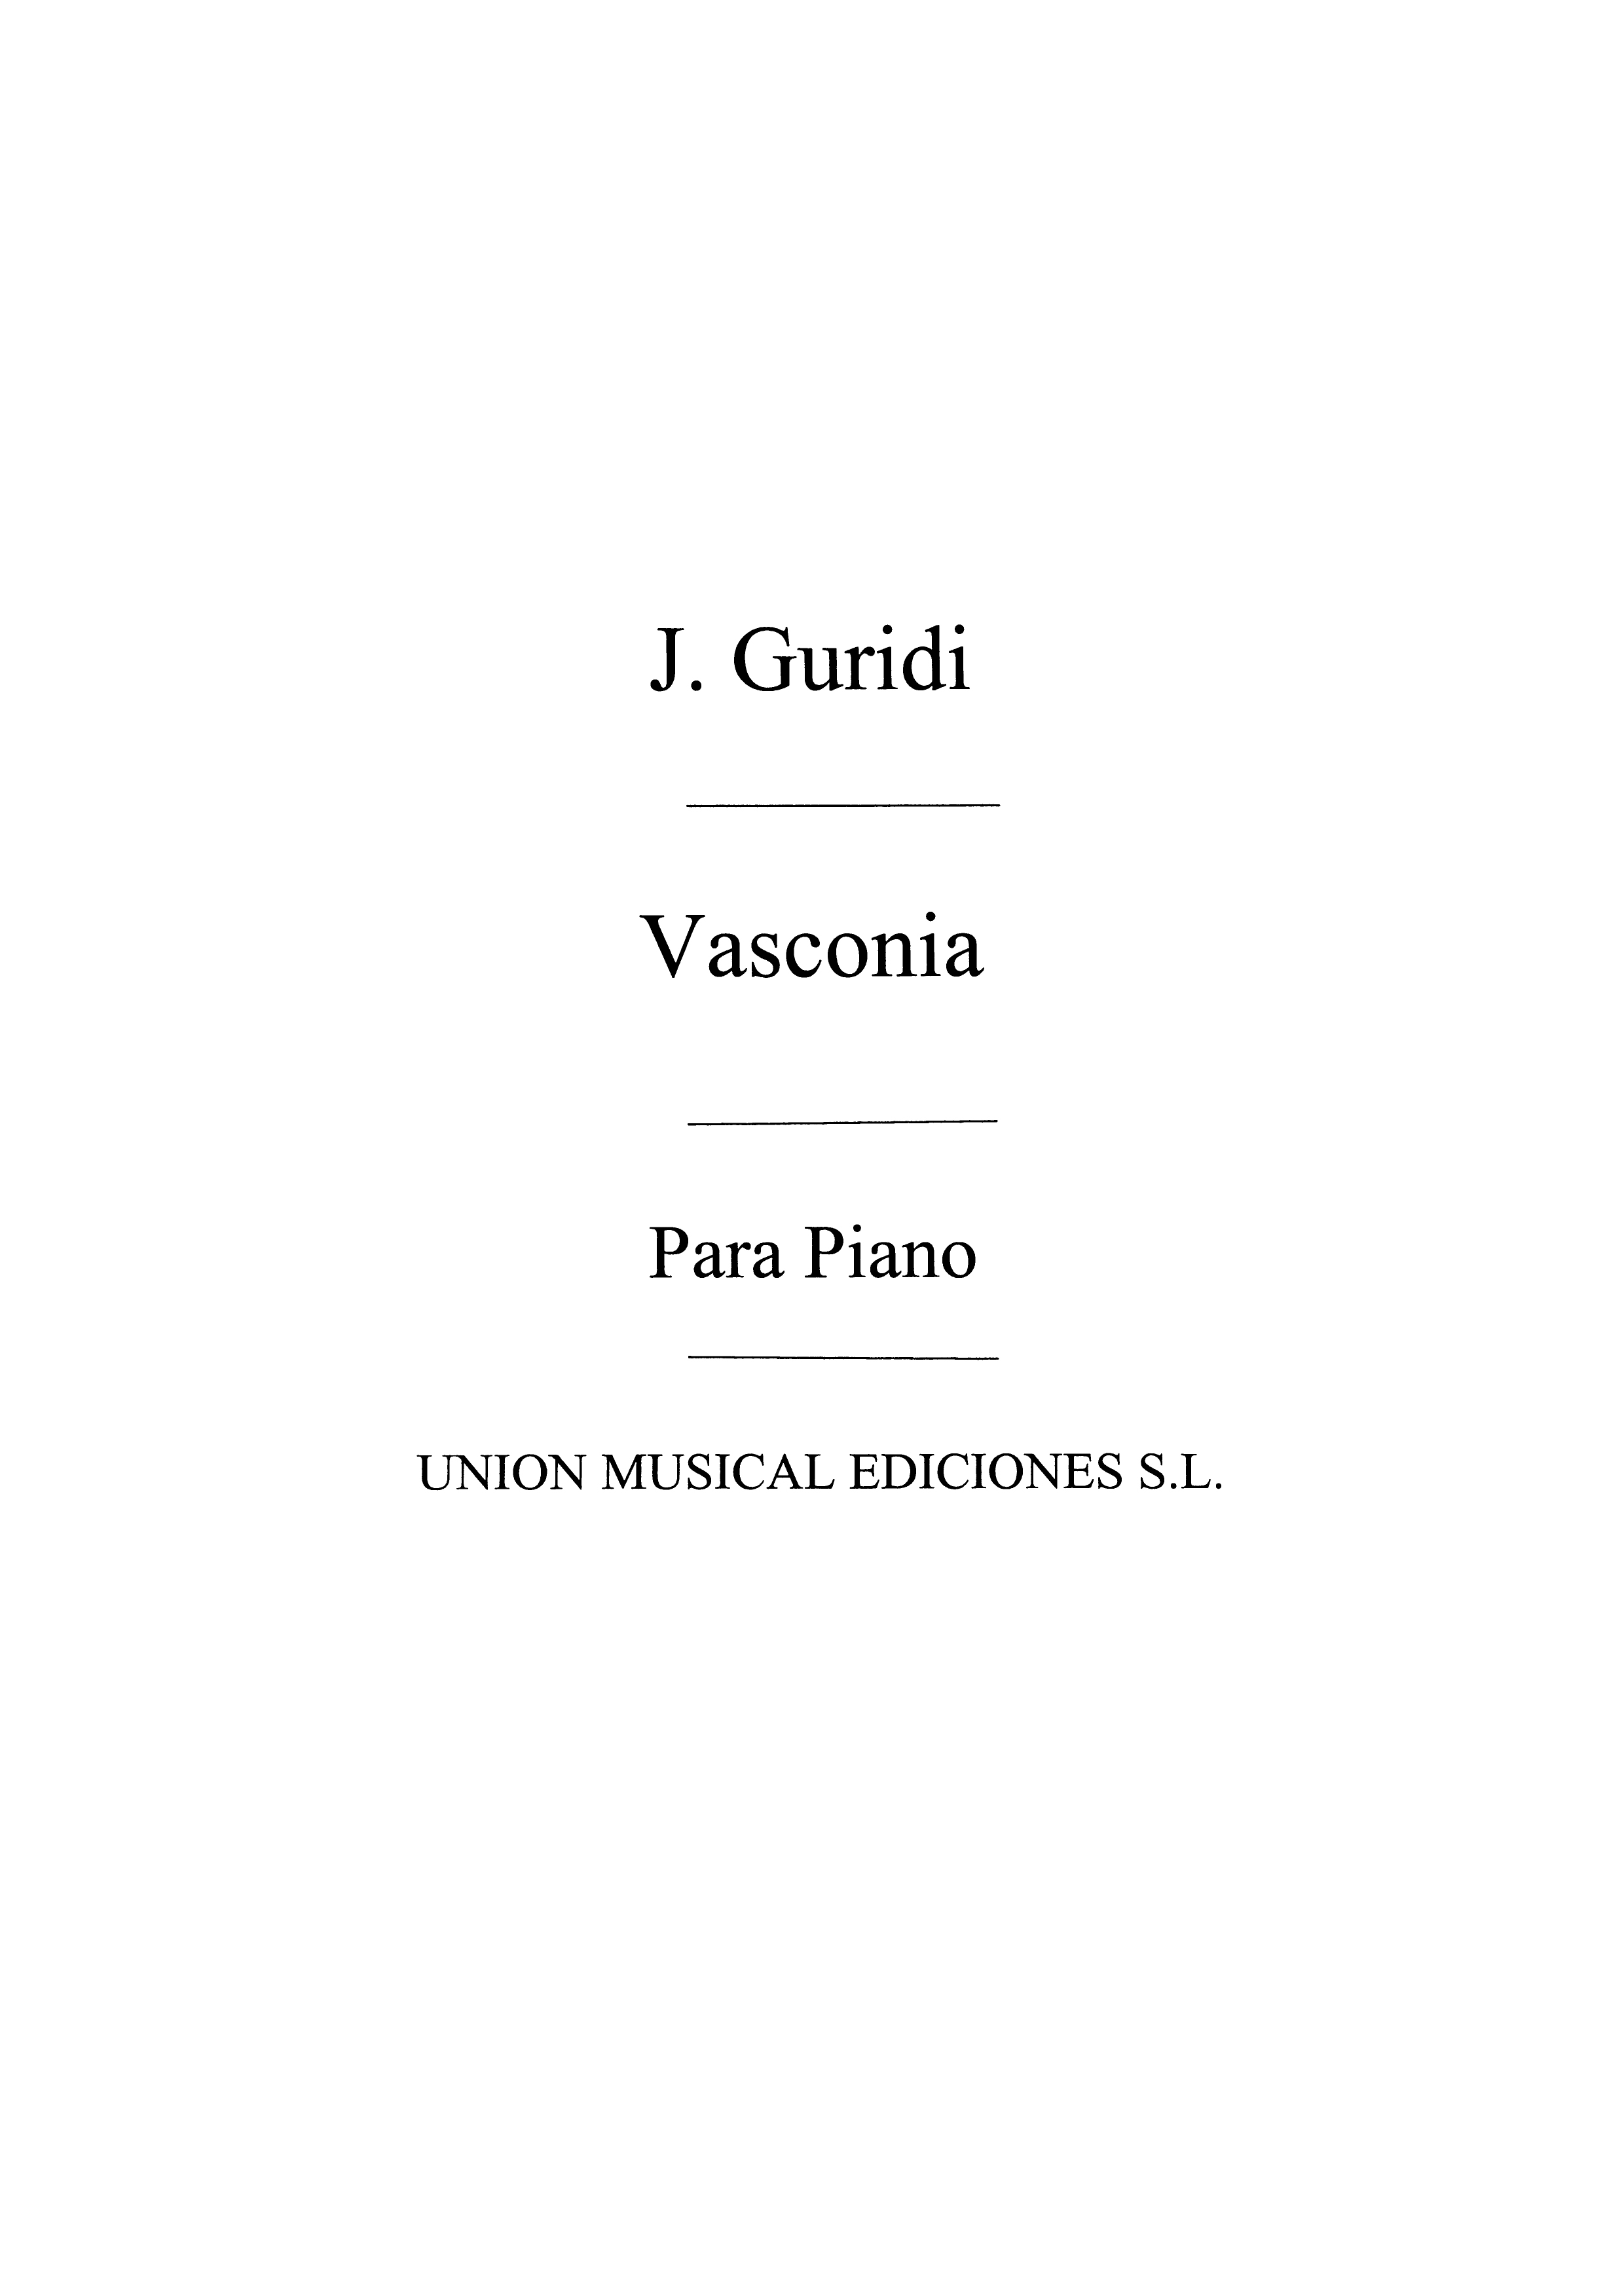 Guridi: Vasconia Tres Piezas Sobre Temas Populares Vascos for Piano